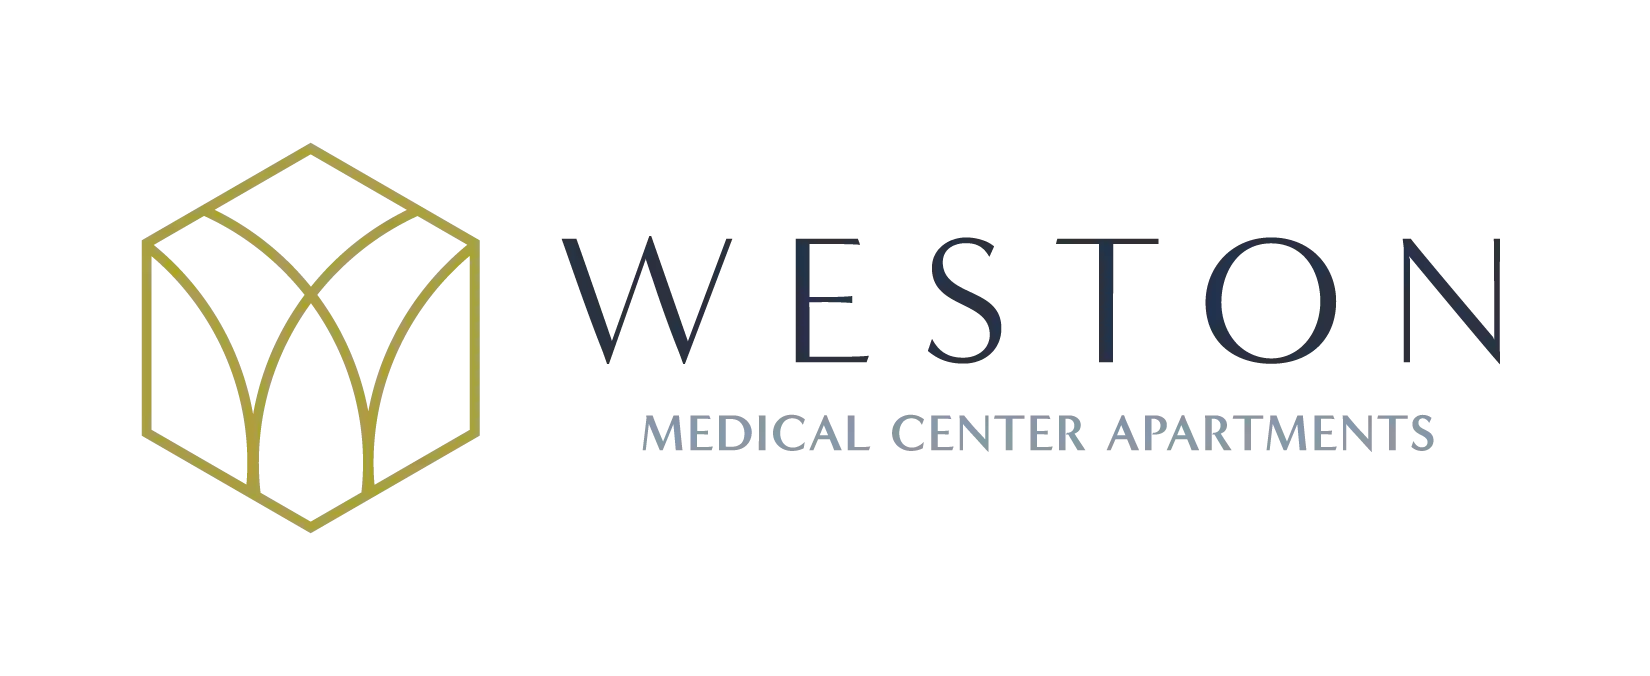 Weston Medical Center Apartments